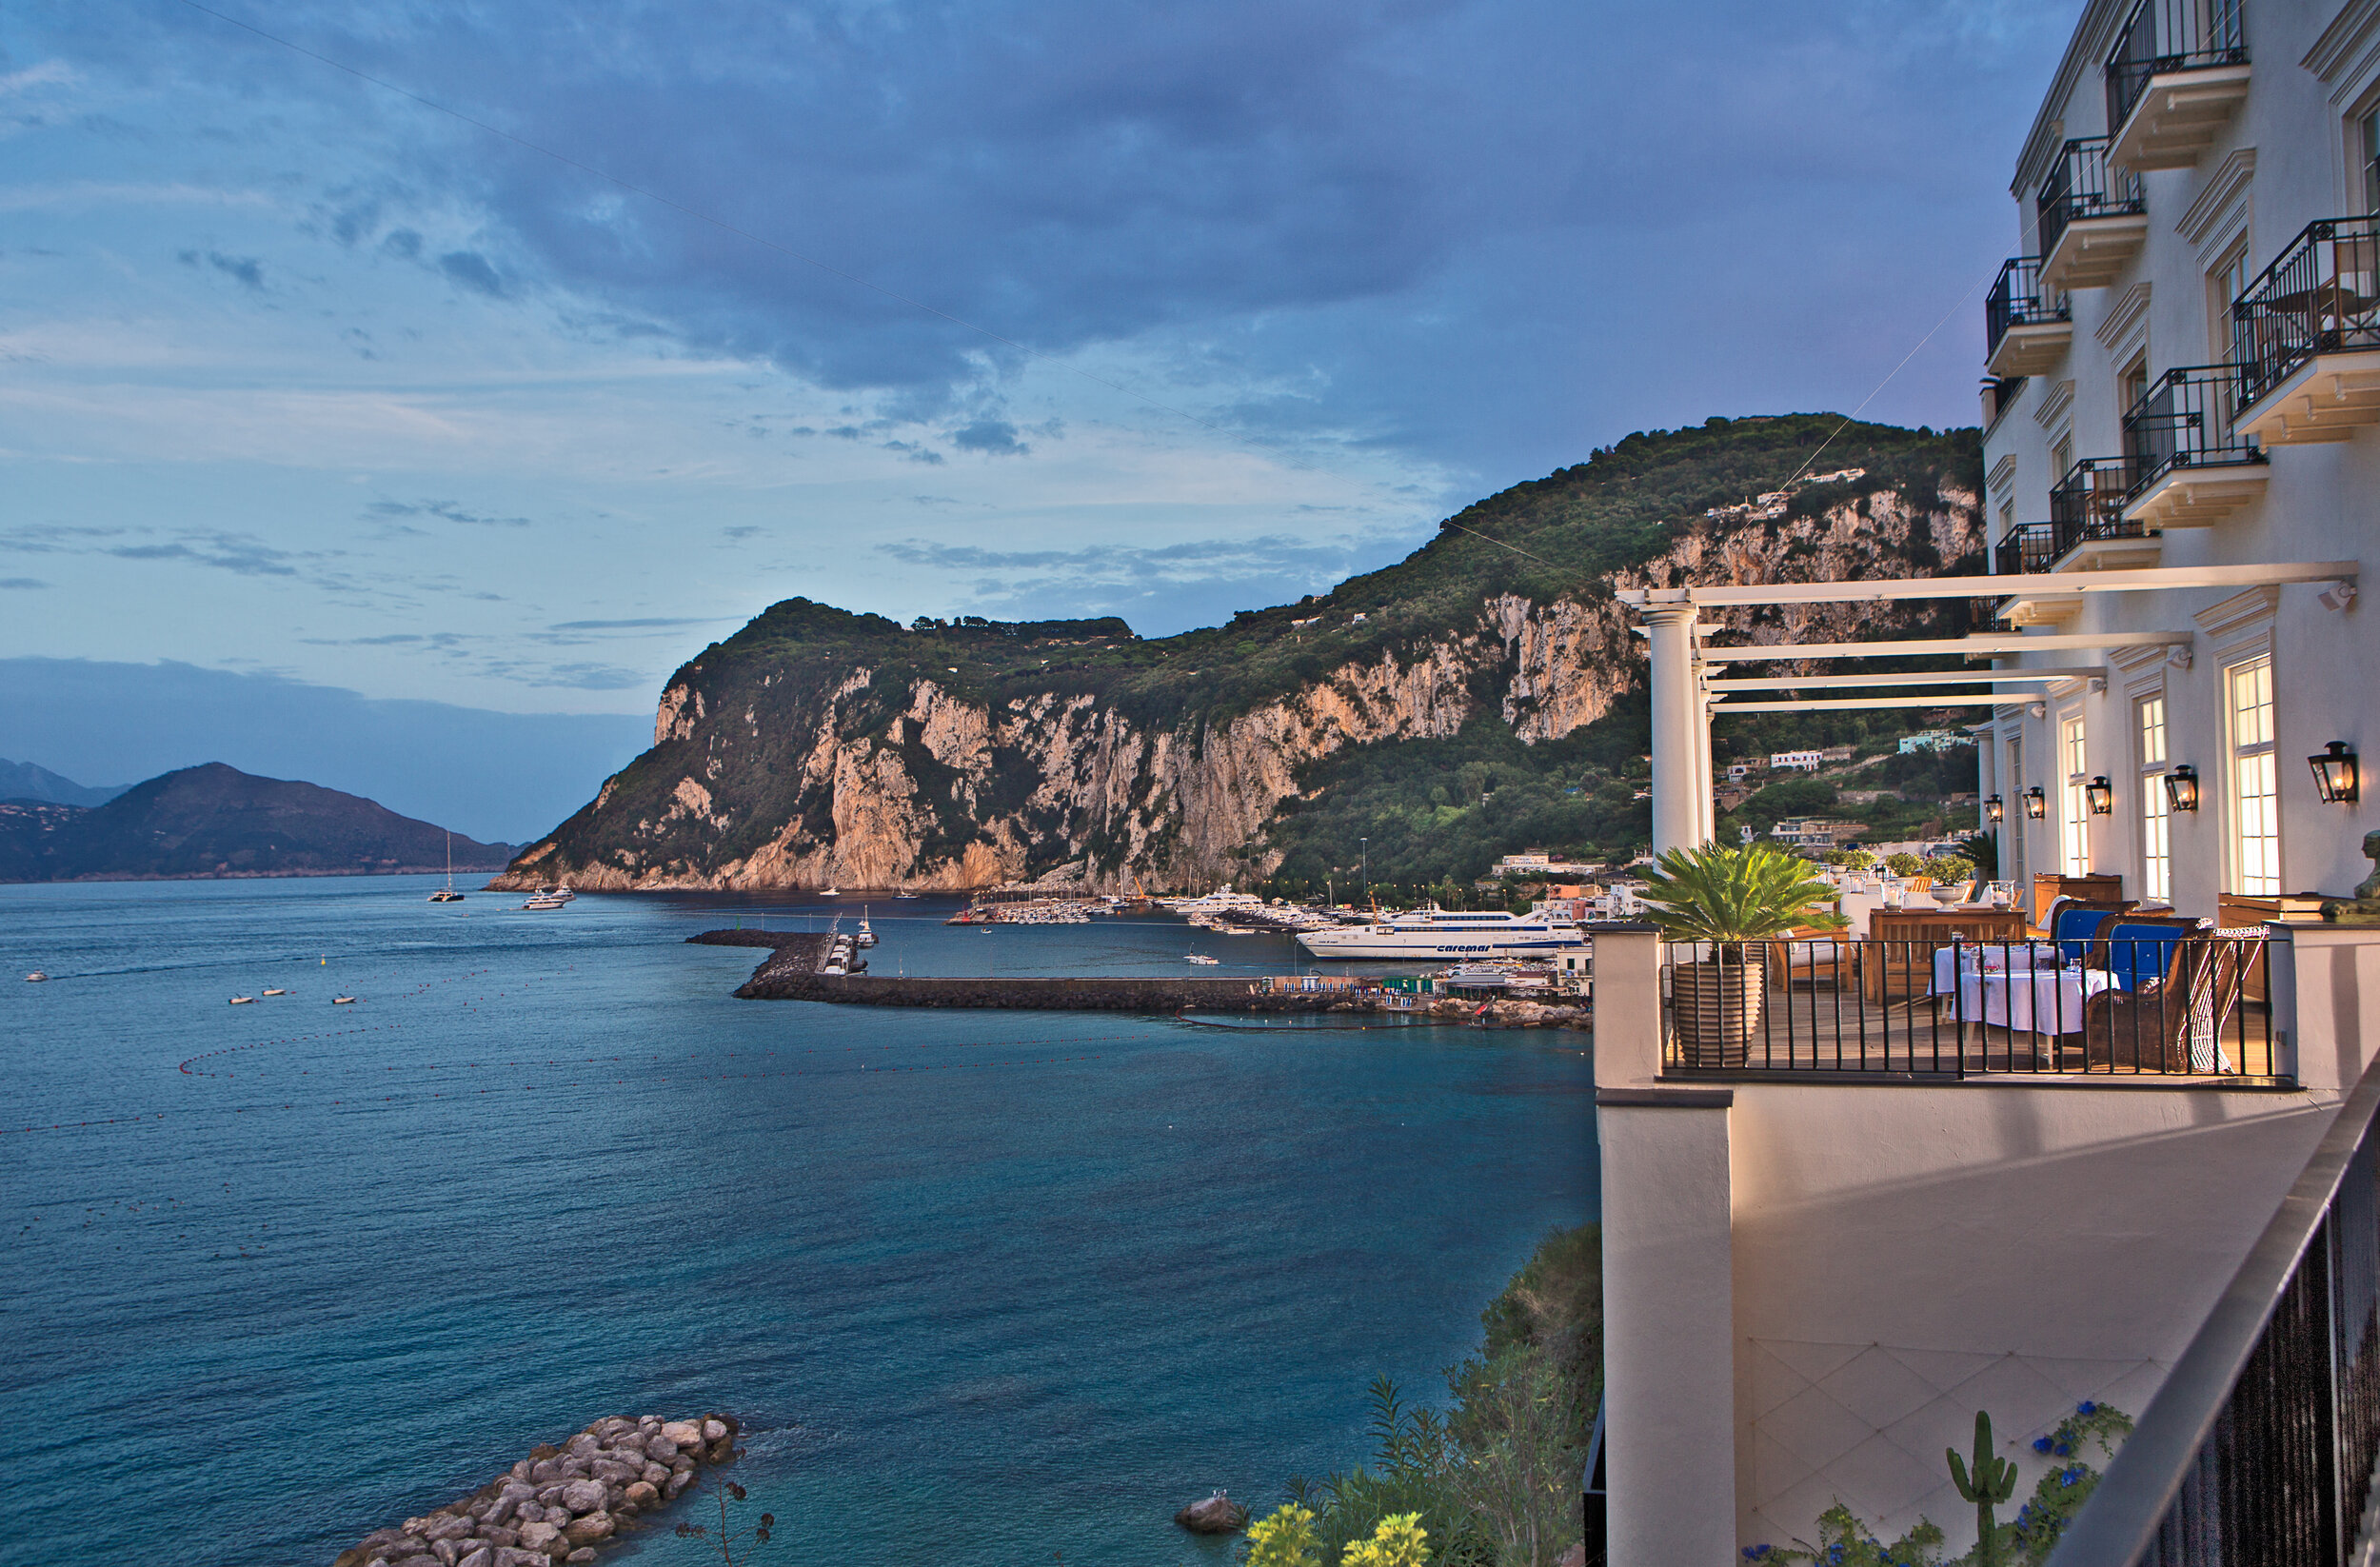 The Terrace at J.K.Place Capri, Amalfi Coast, Italy